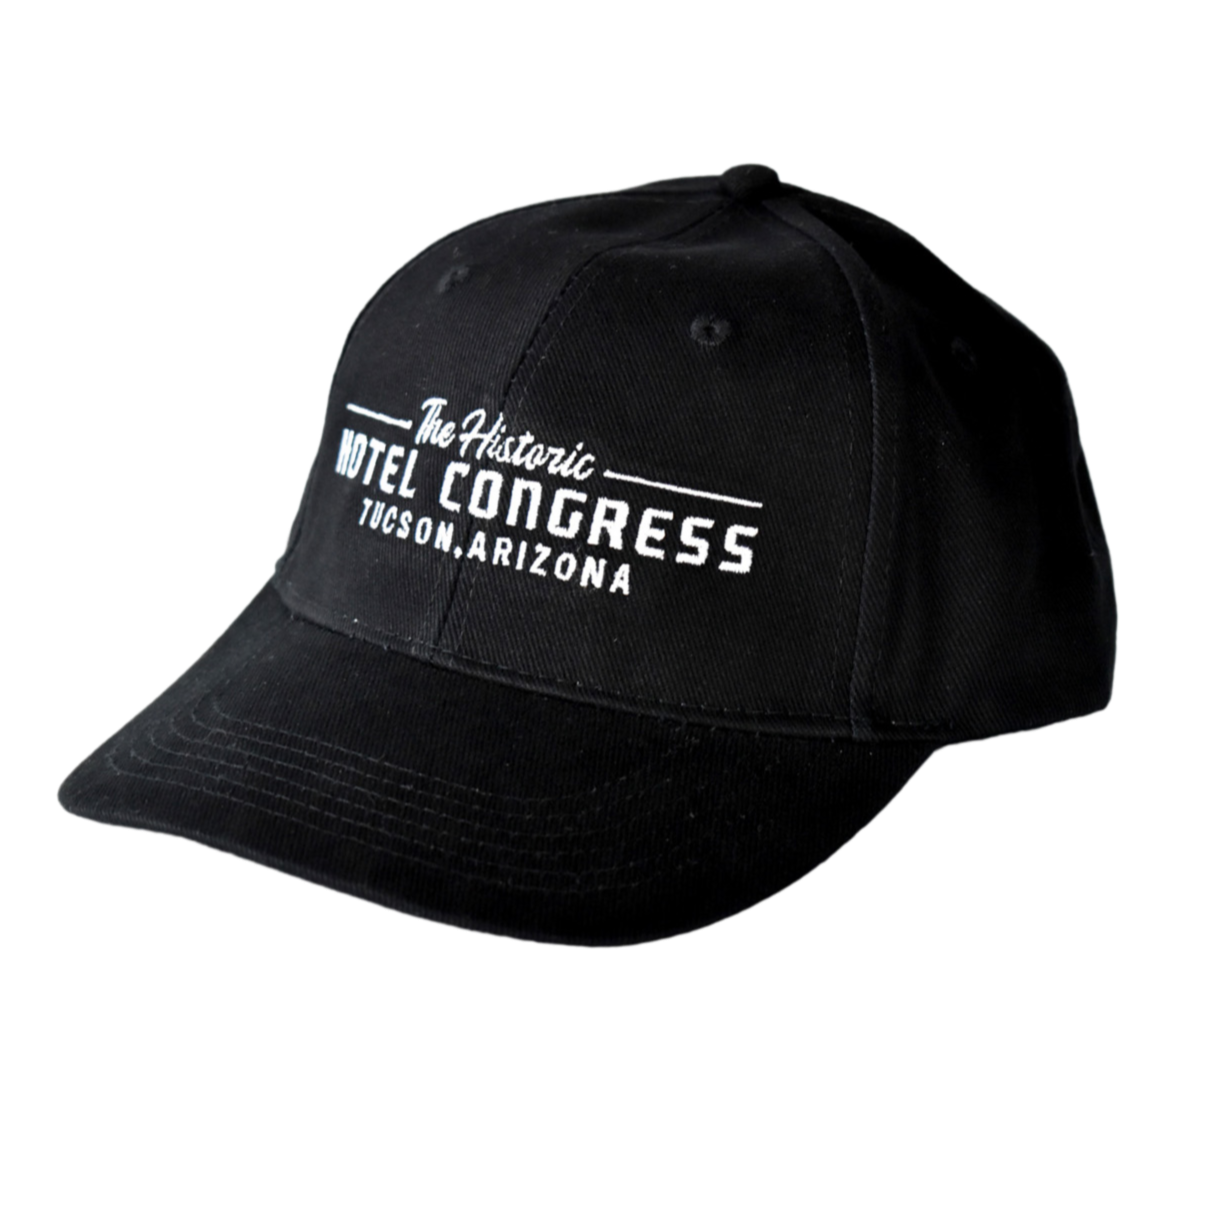 Hotel Congress Logo Cap